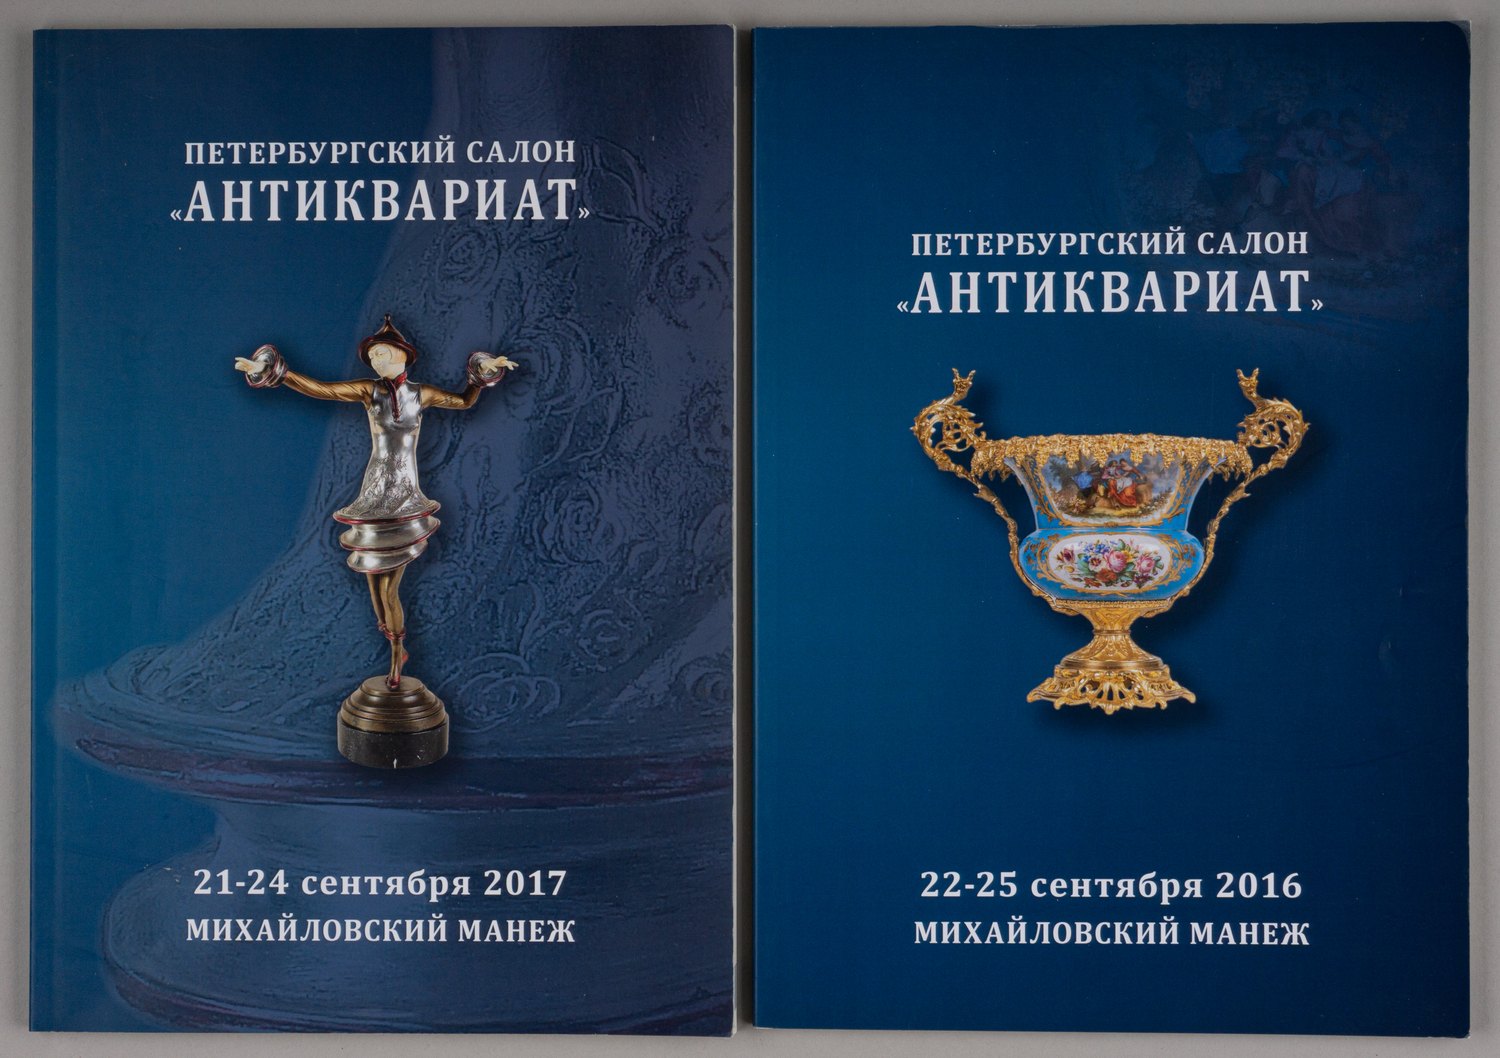 2 каталога петербургского салона «Антиквариат». 2016, 2017.